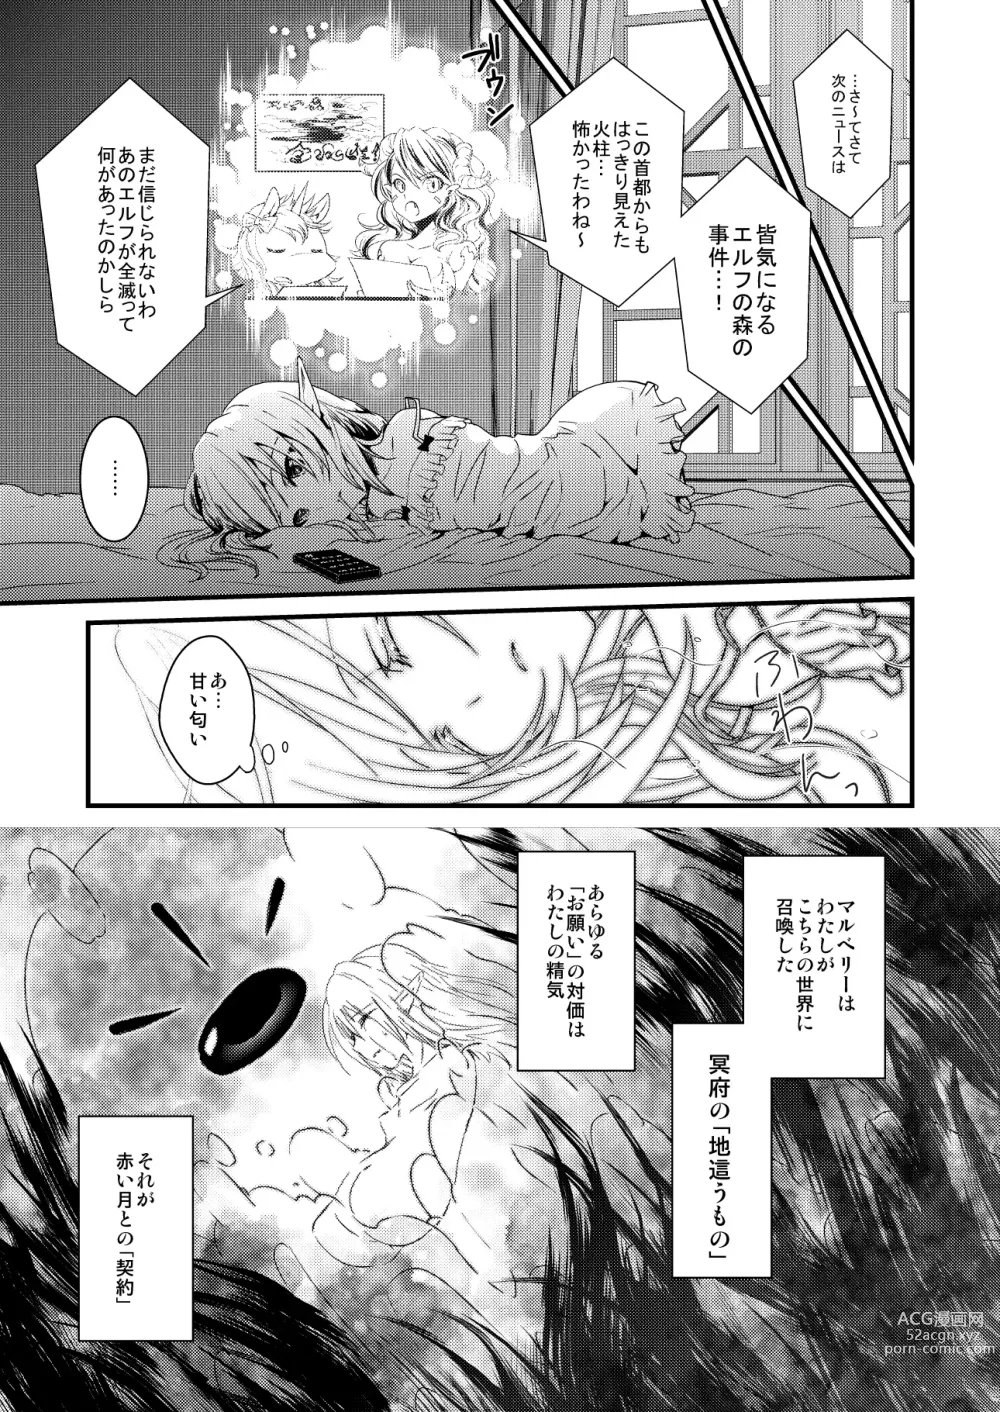 Page 9 of doujinshi Silkworm